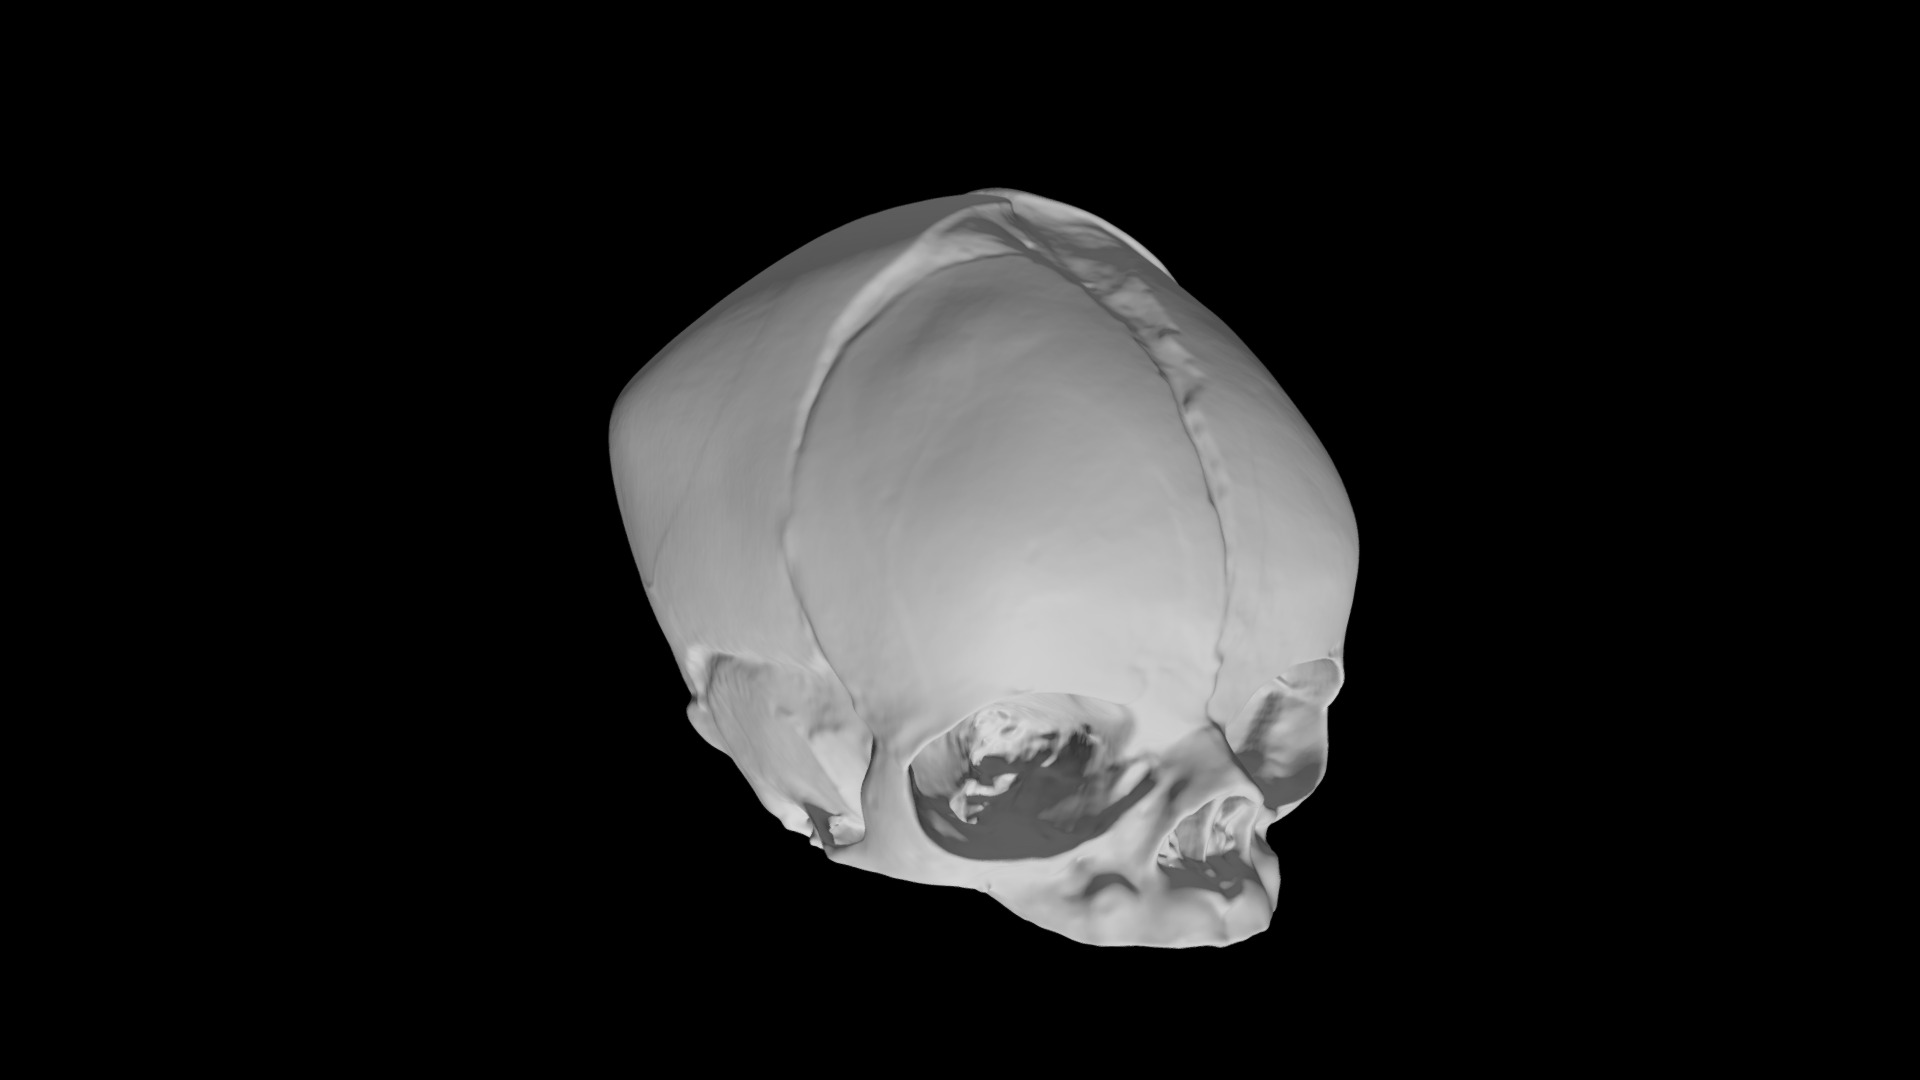 Human Fetal Skull V2 Download Free 3d Model By Eric Bauer Ebauer4 7abc3f9 Sketchfab 4357